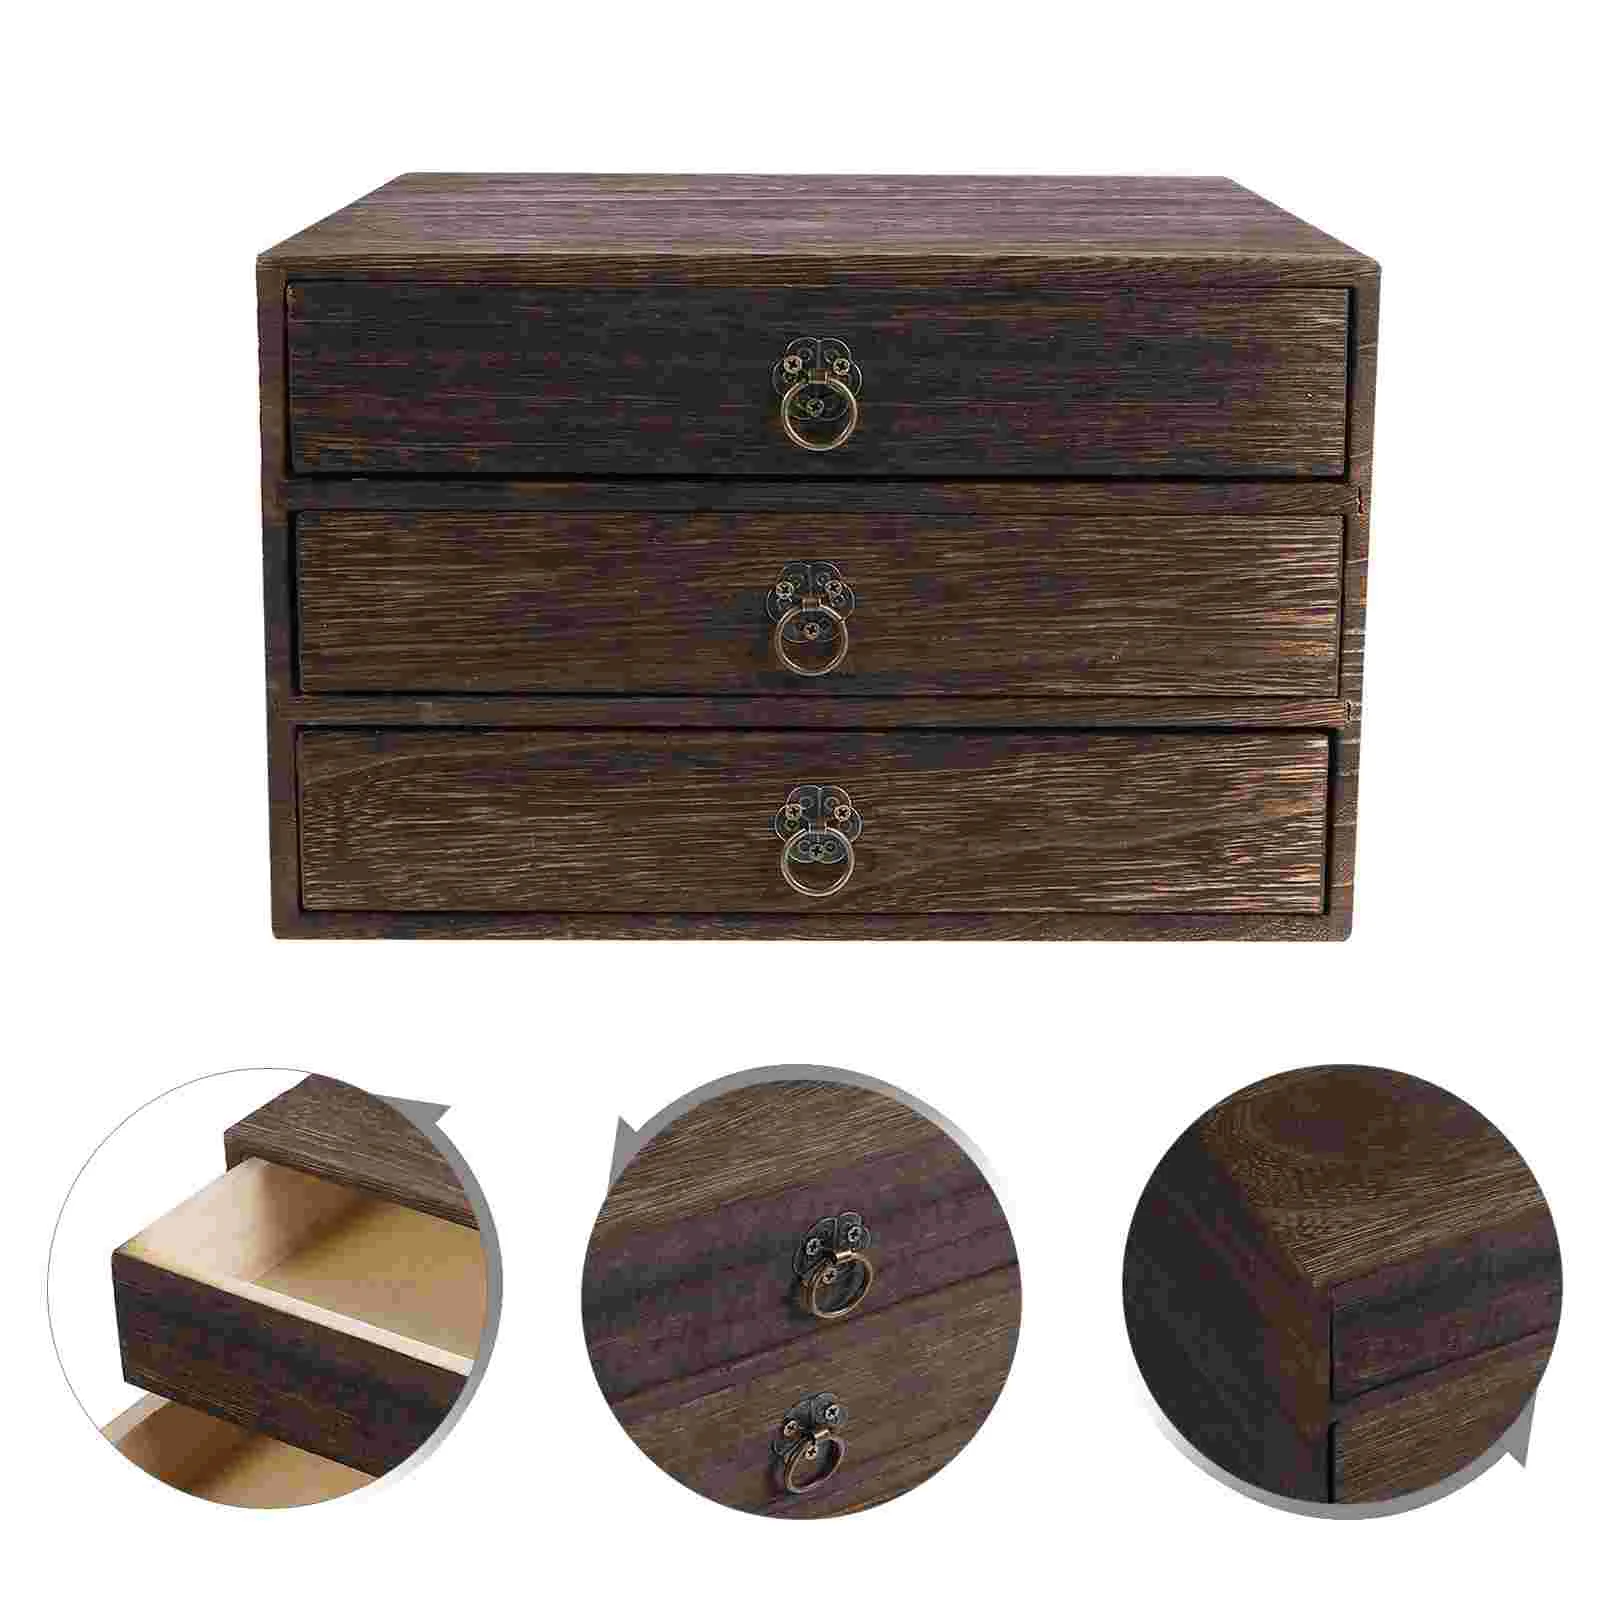 

Vintage Wood Decor Organizing Box Multi-Layer Drawer Type Jewelry Storage Case Dustproof Document Box With